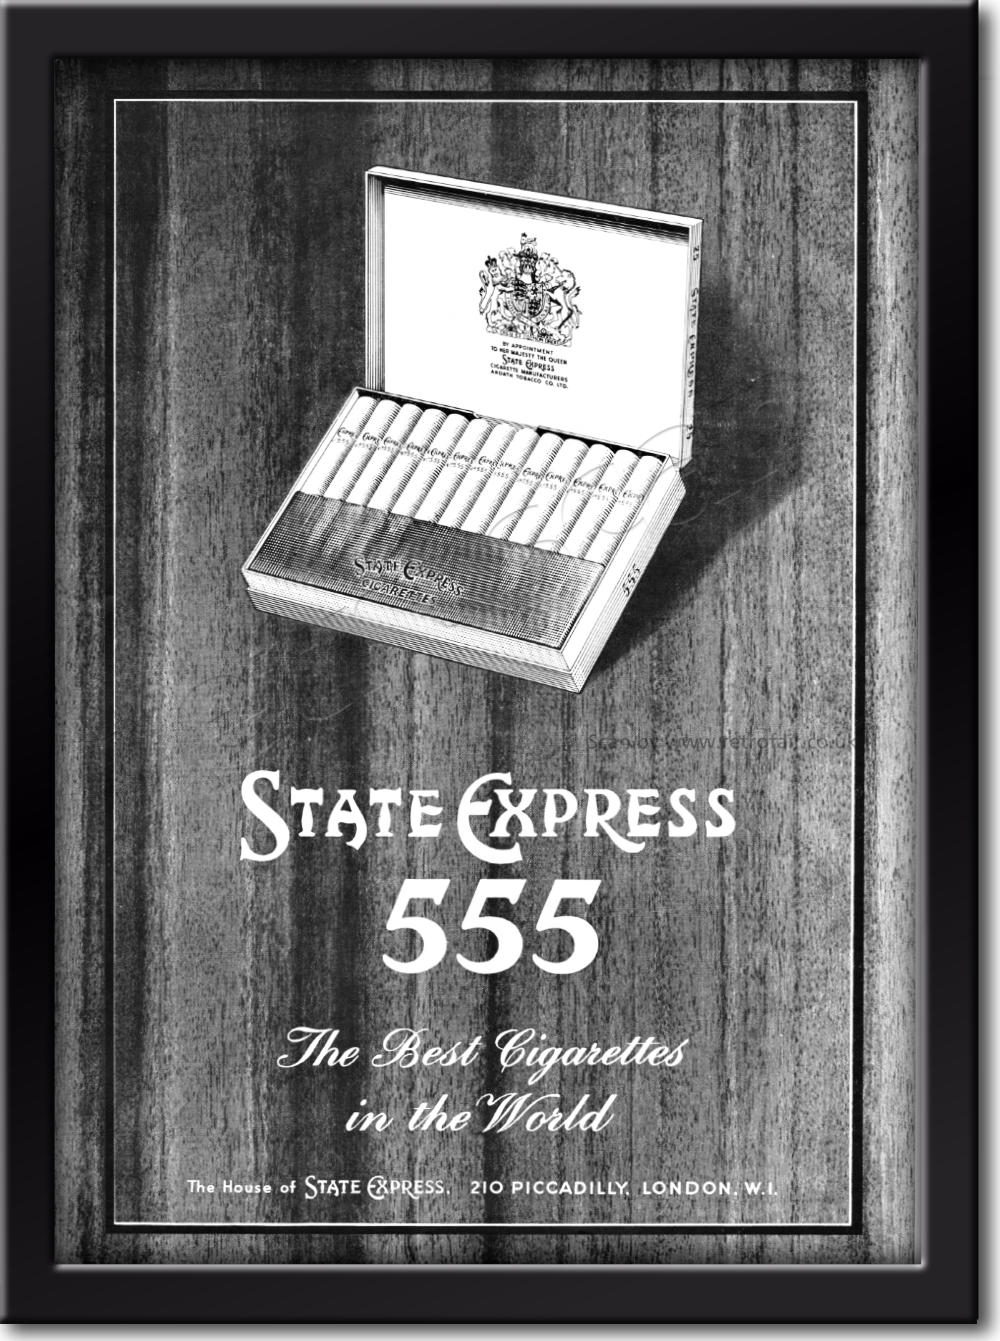 1959 vintage State Express 555 Cigarettes advert